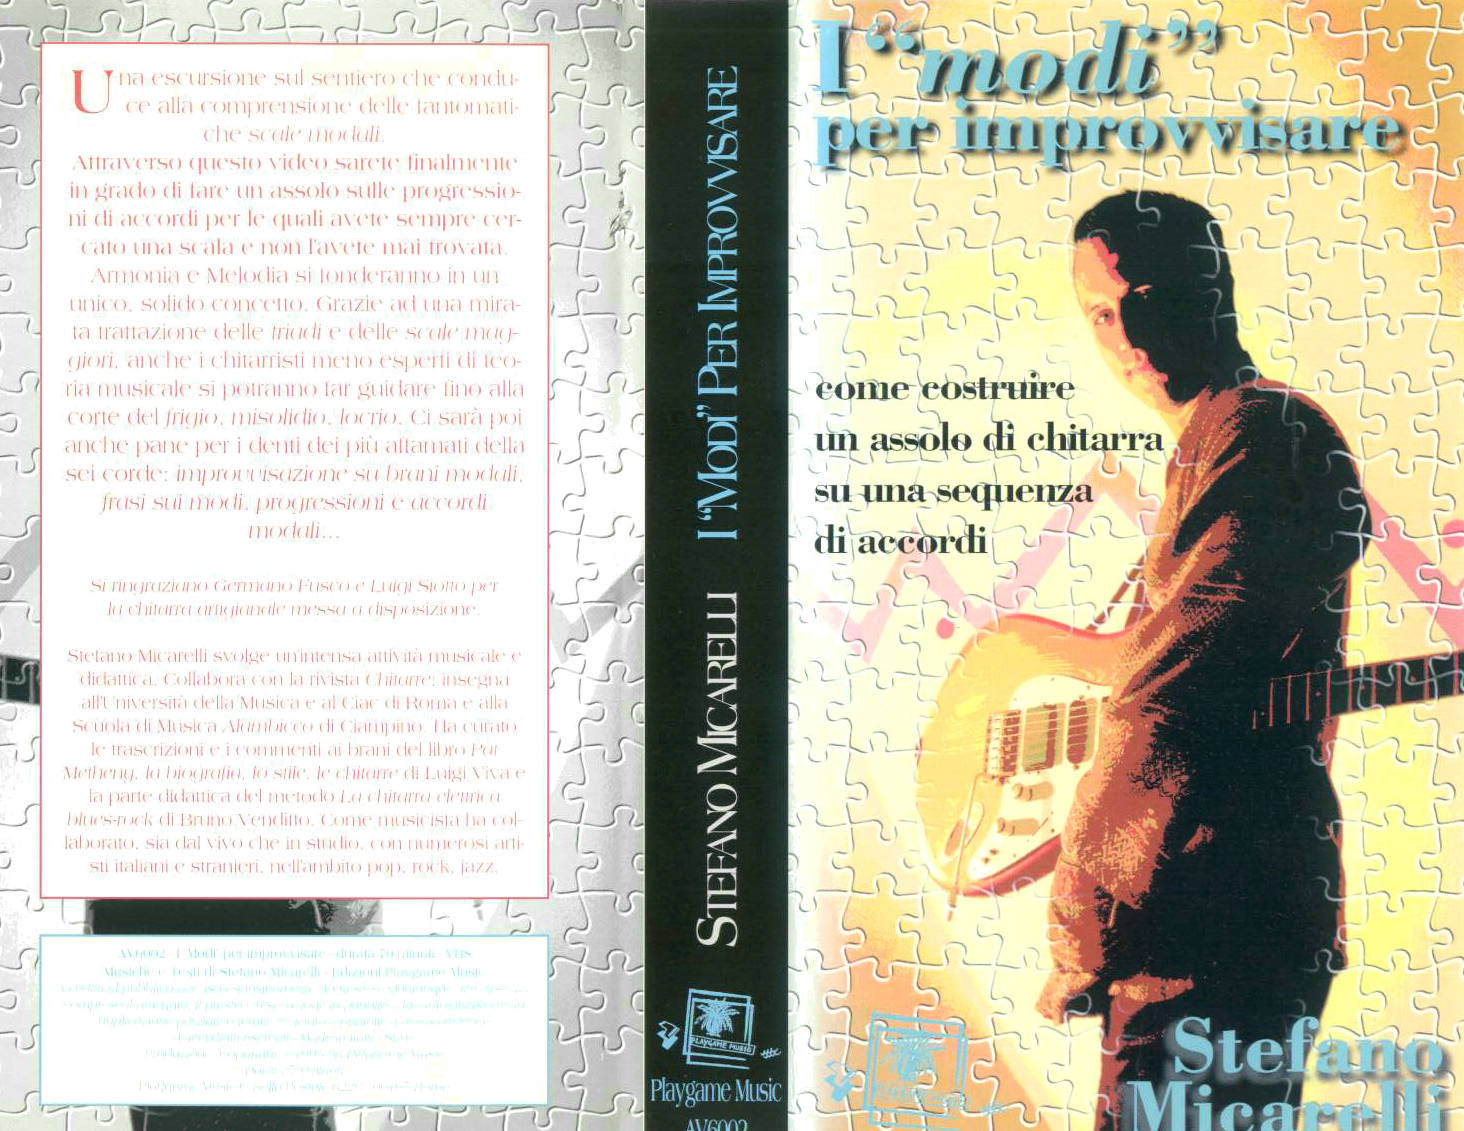 S. Micarelli - I "modi" per improvvisare / videocassetta VHS